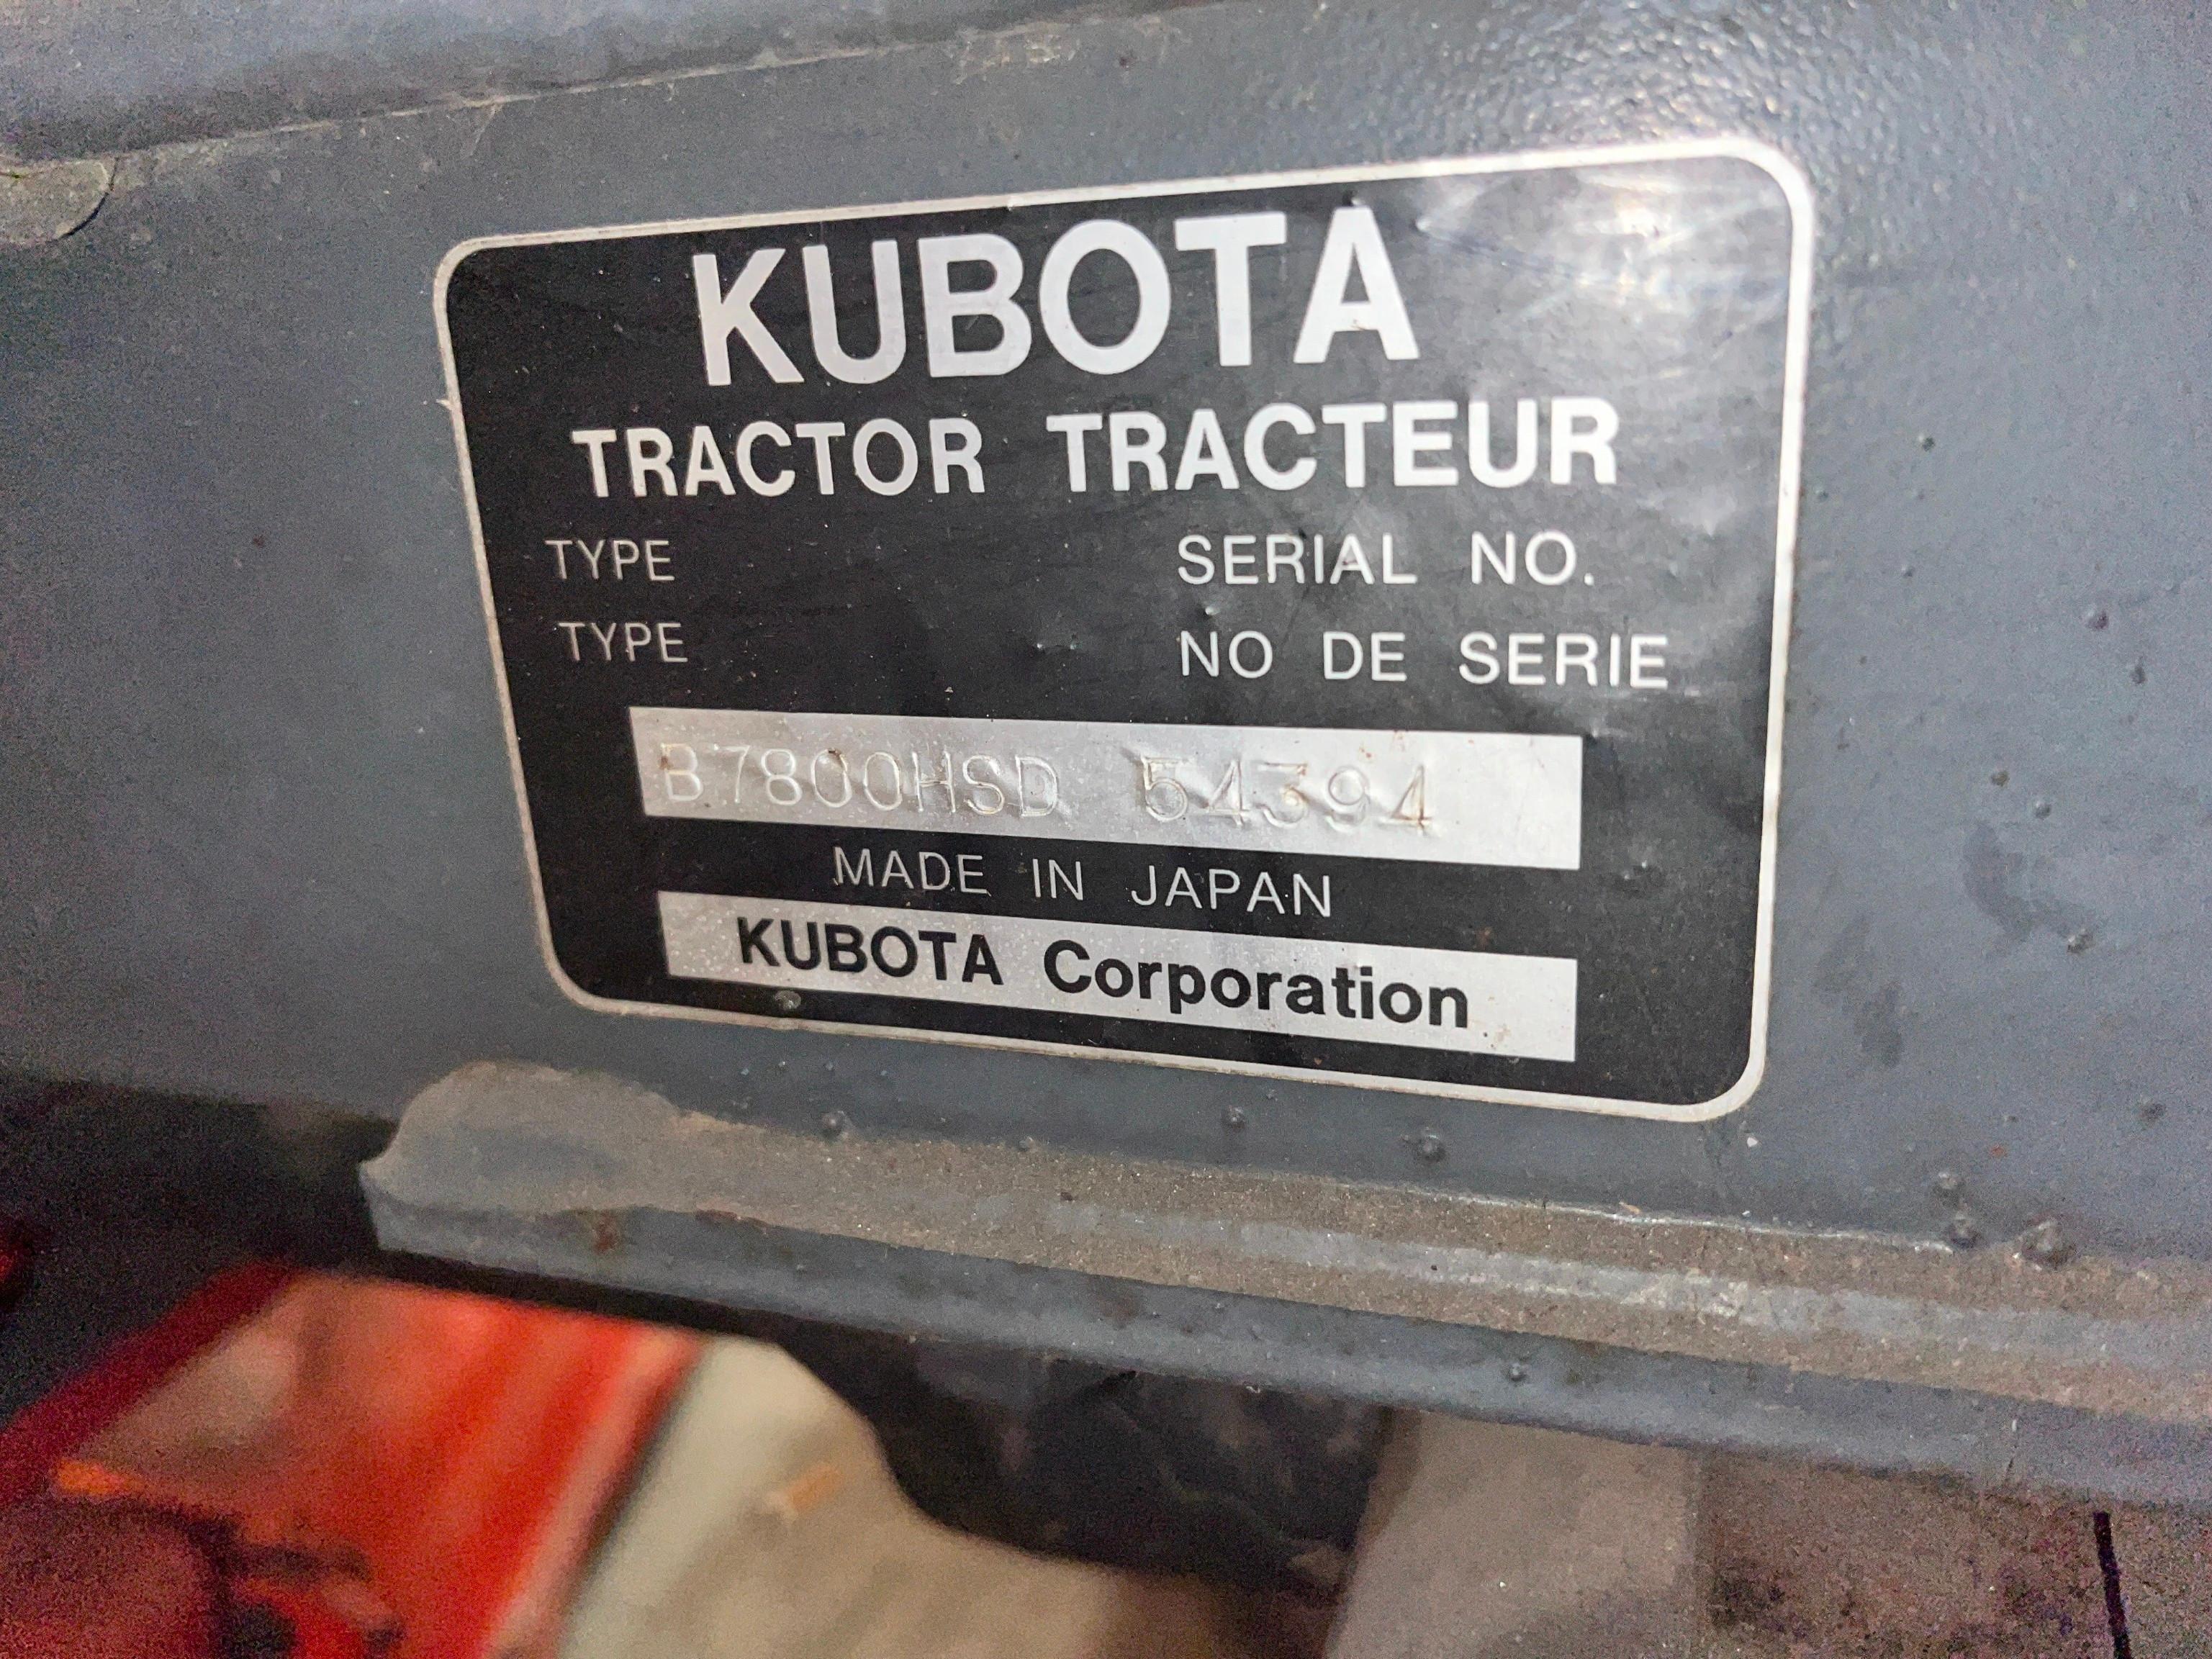 KUBOTA B7800HSD LOADER LANDSCAPE TRACTOR SN:54394 4x4, powered by Kubota diesel engine, equipped